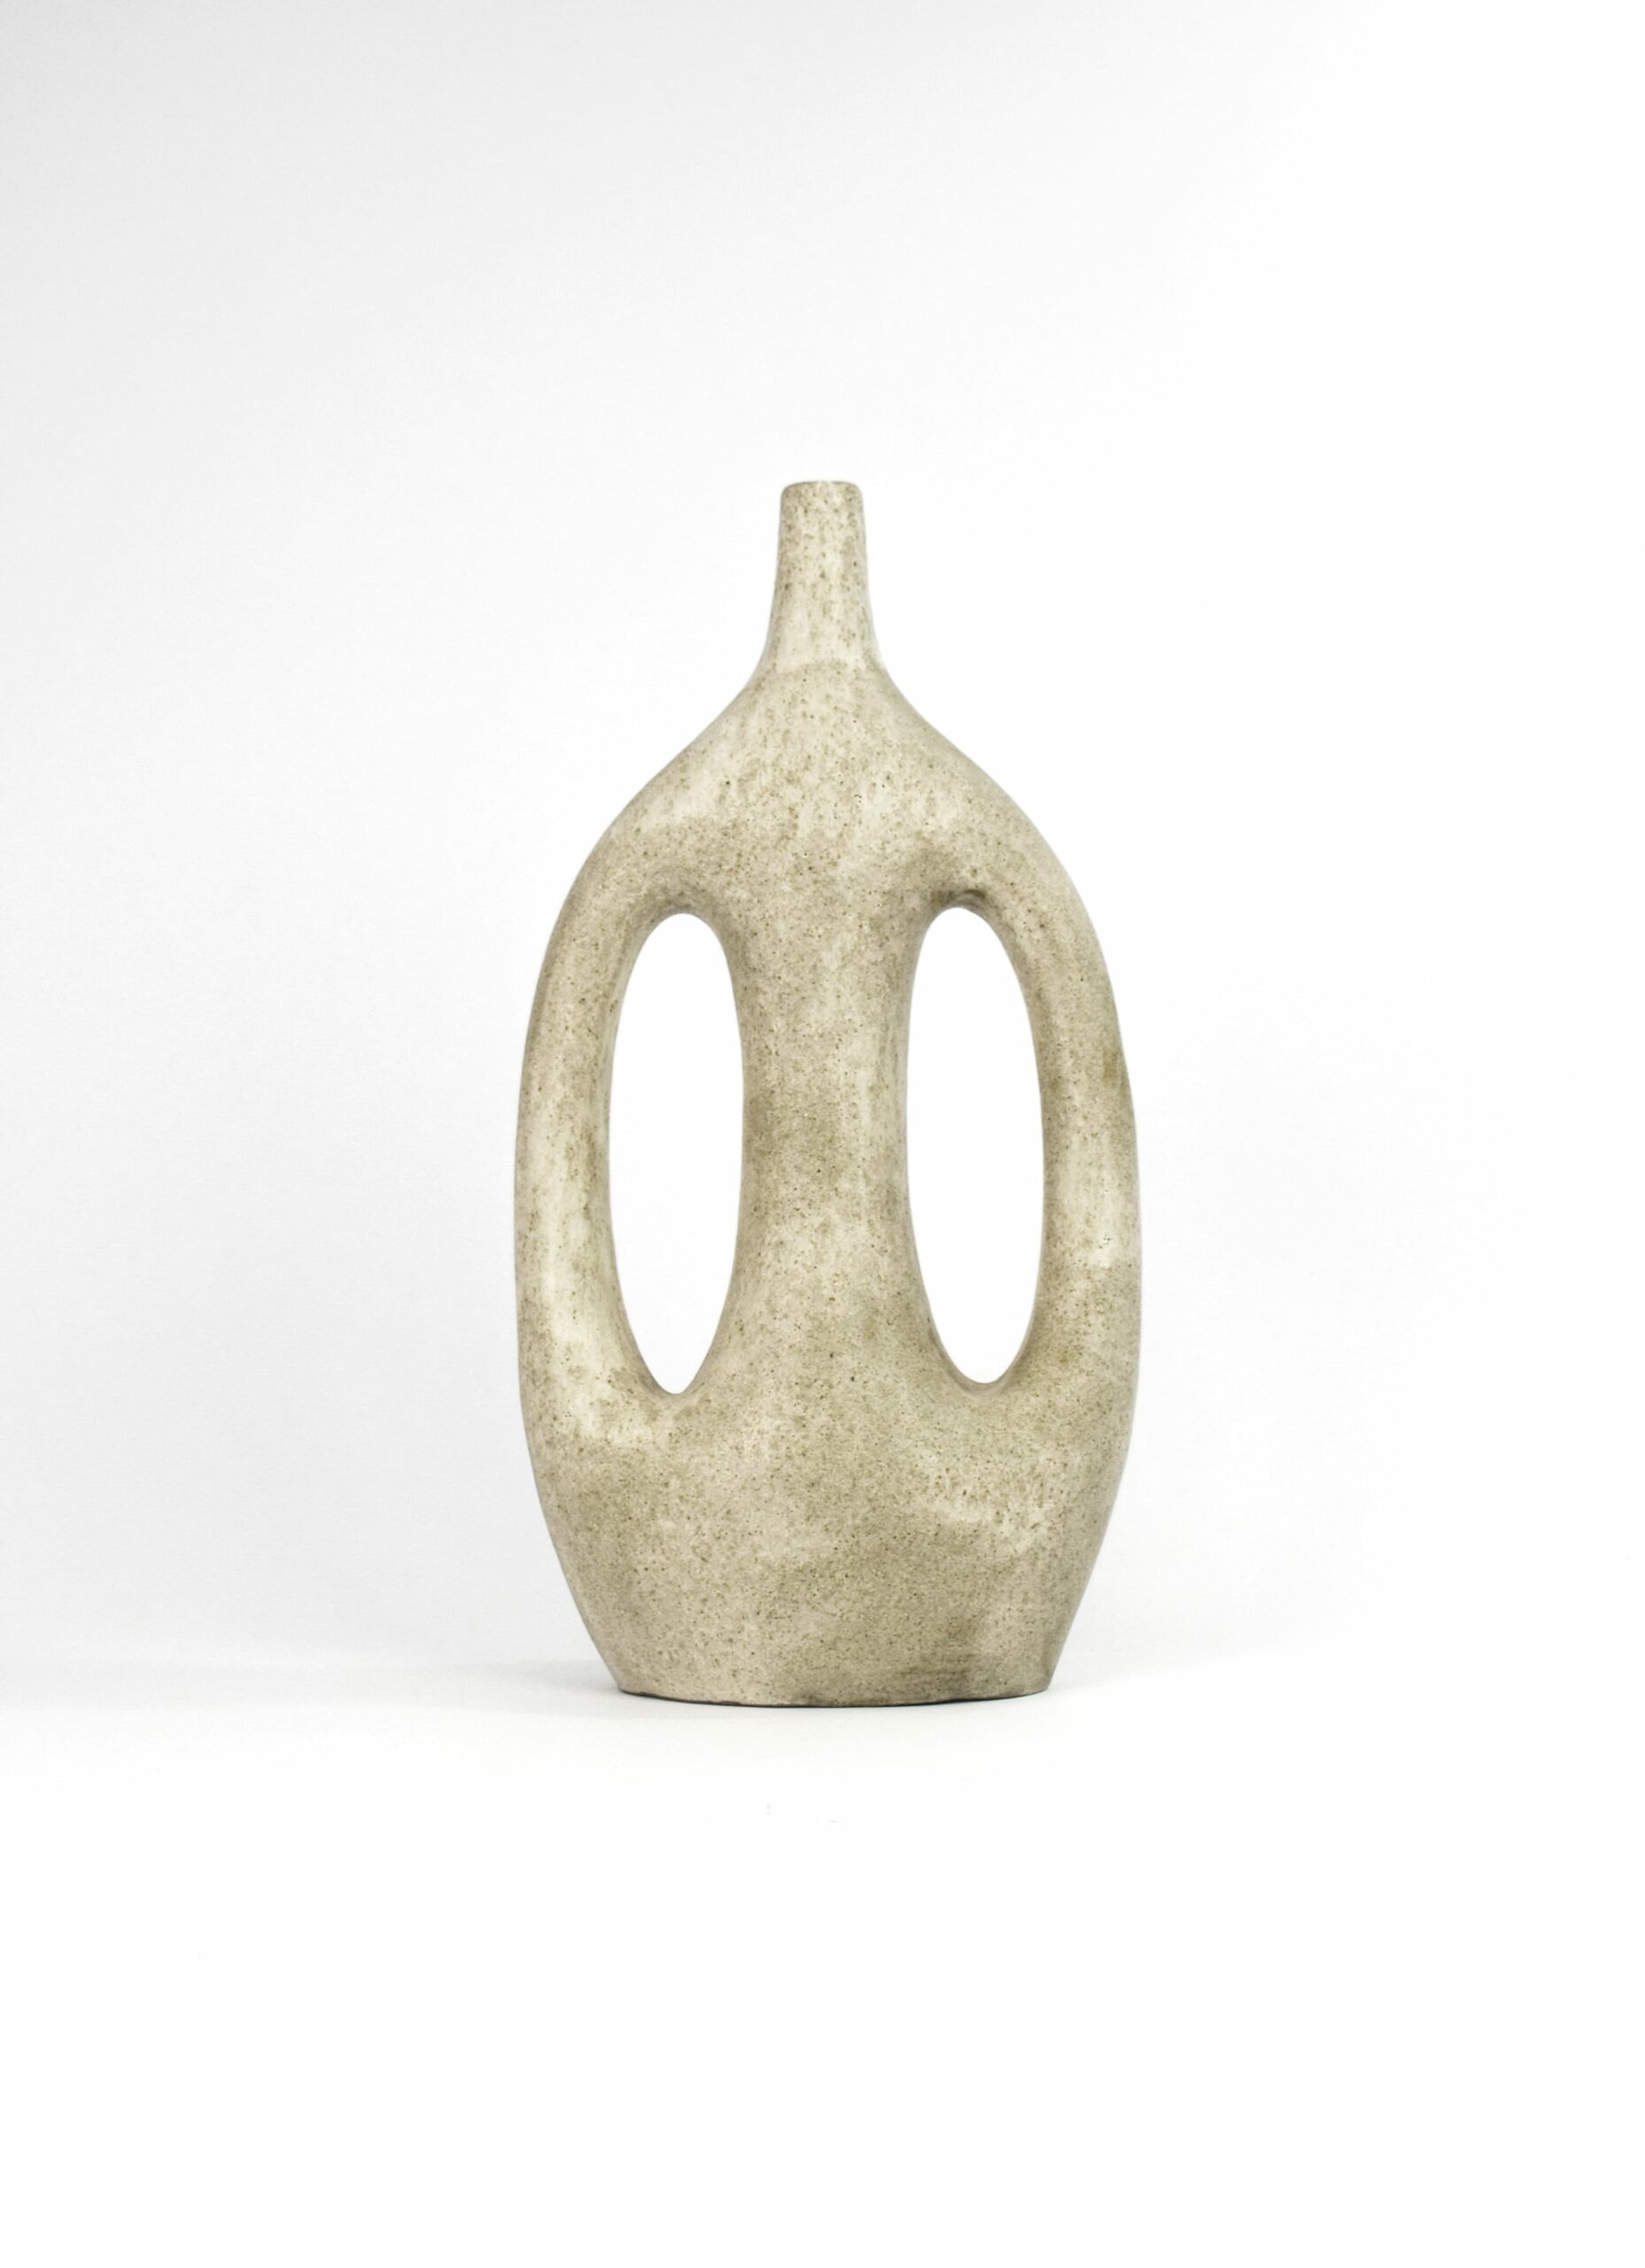 Viv Lee - Handmade stoneware vessel - Sympoiesis III